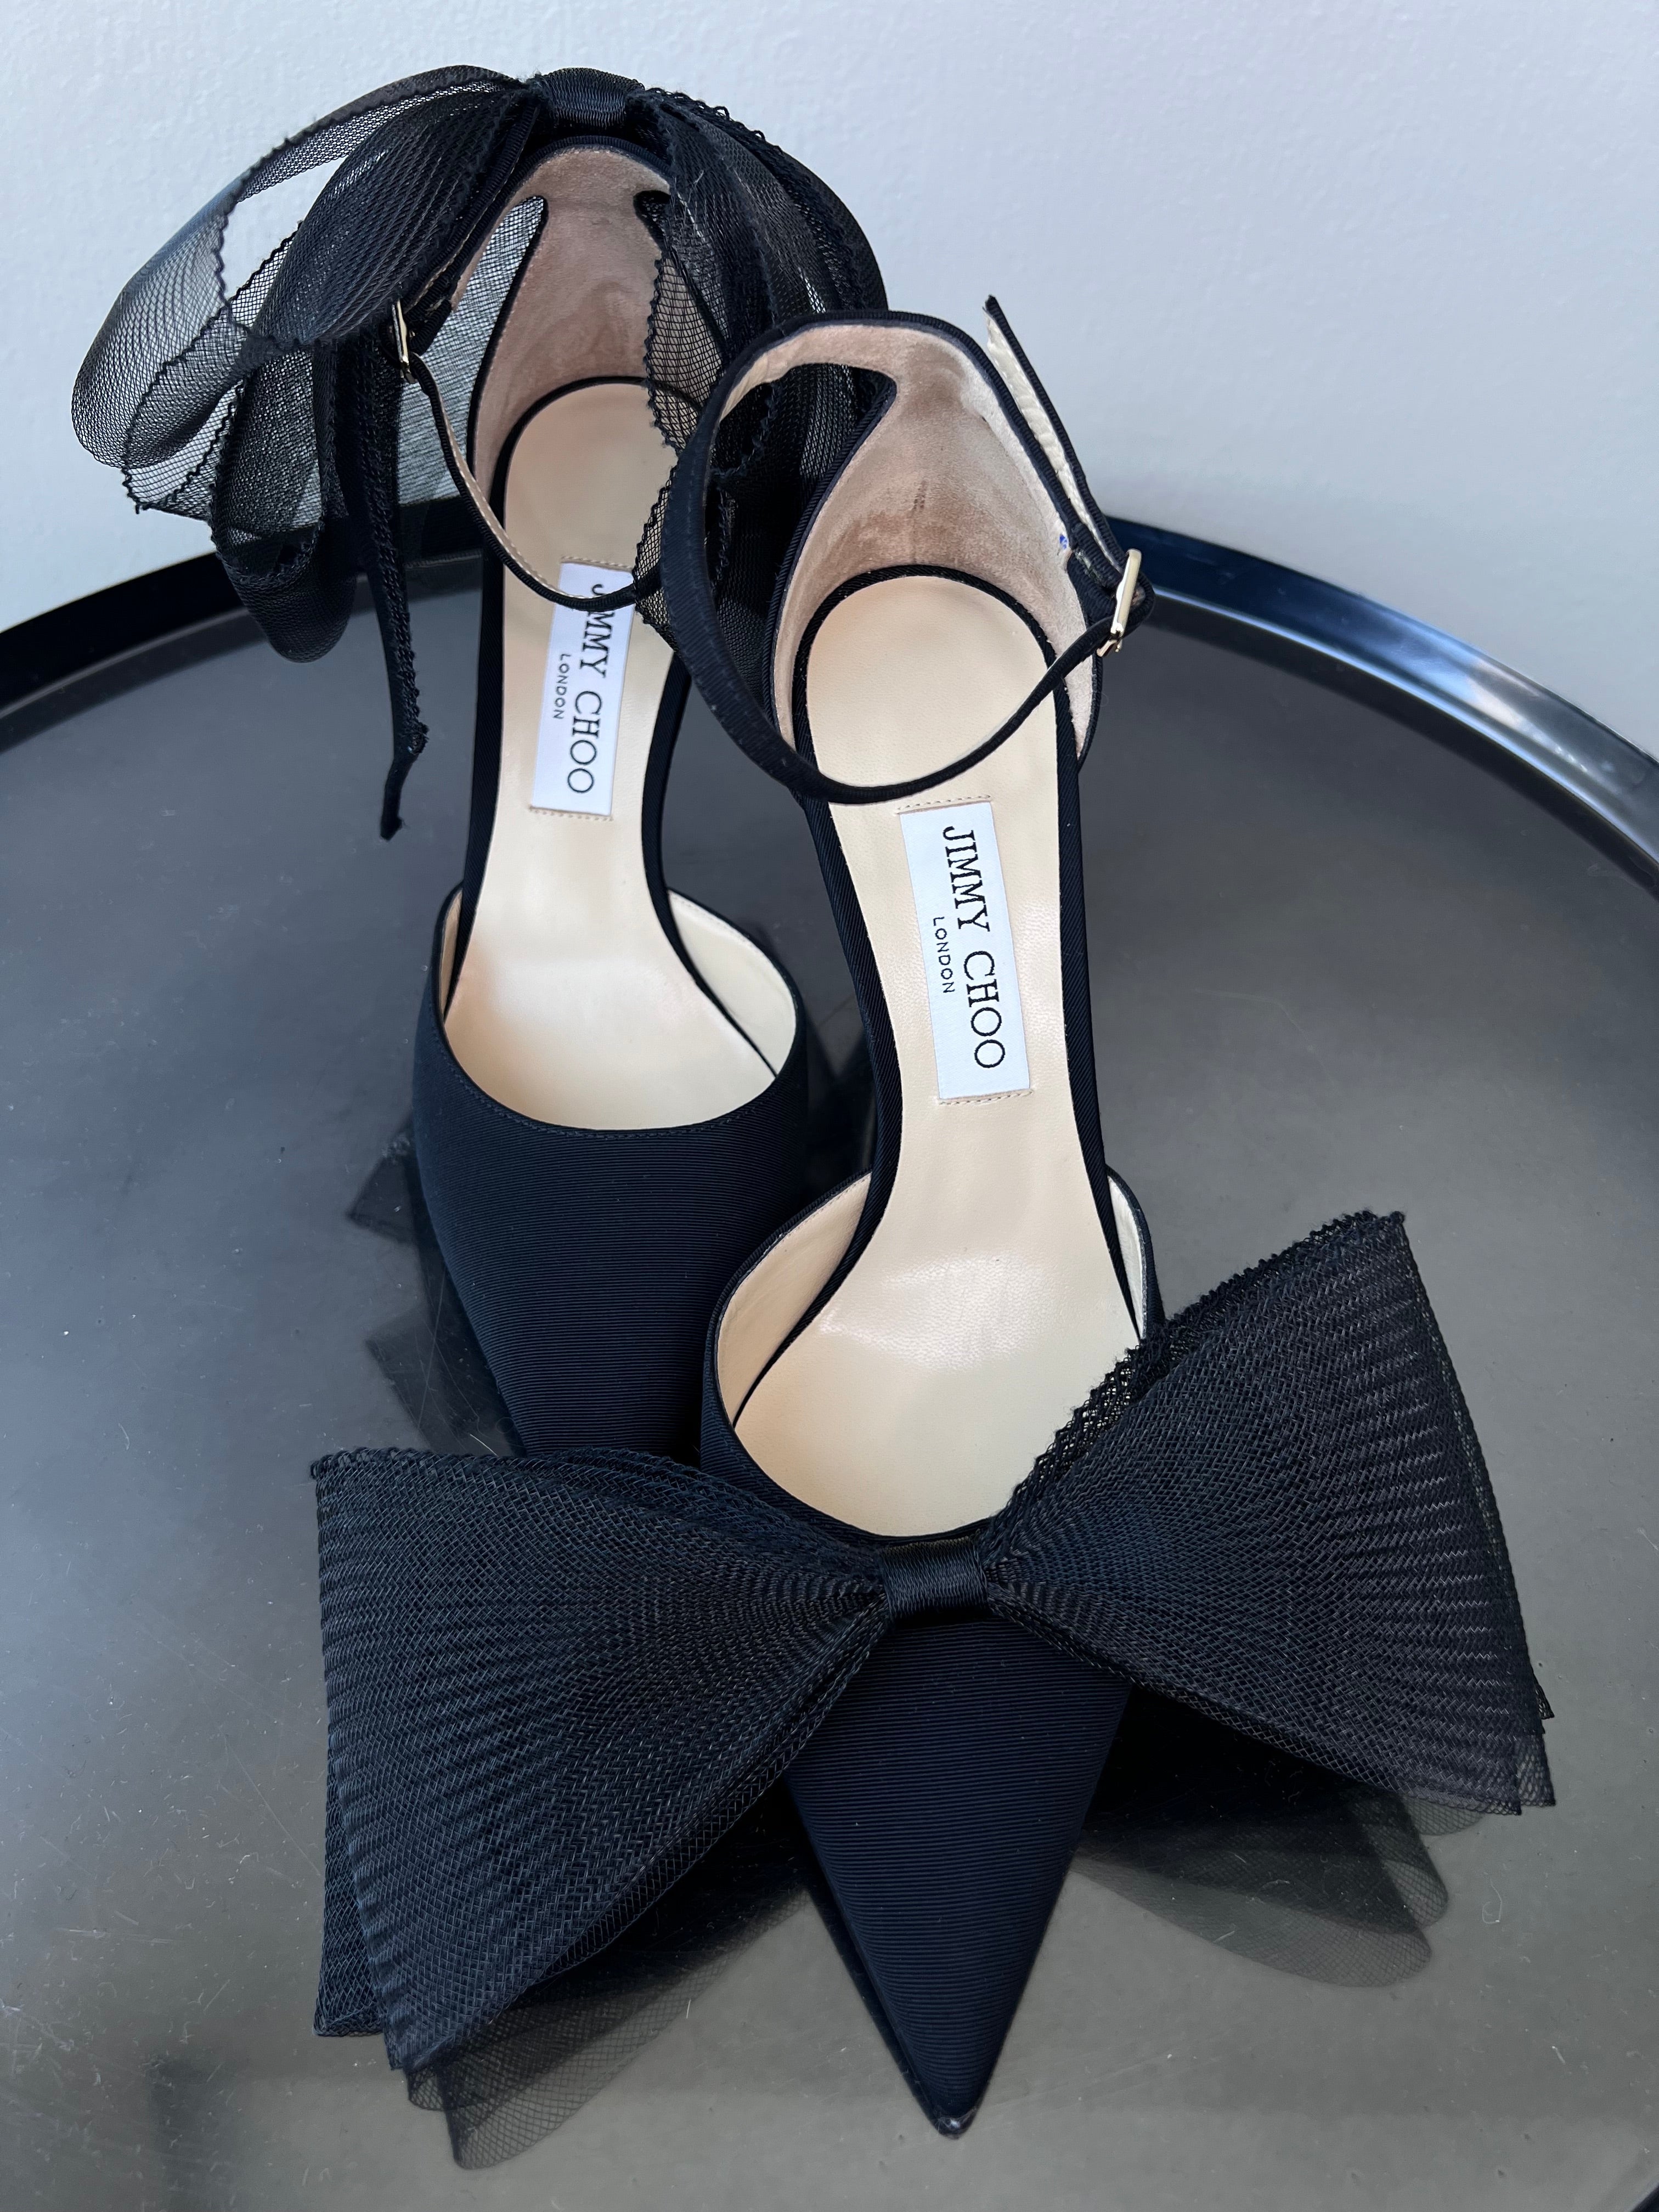 Black aveline bow-embellished grosgrain heels - JIMMY CHOO